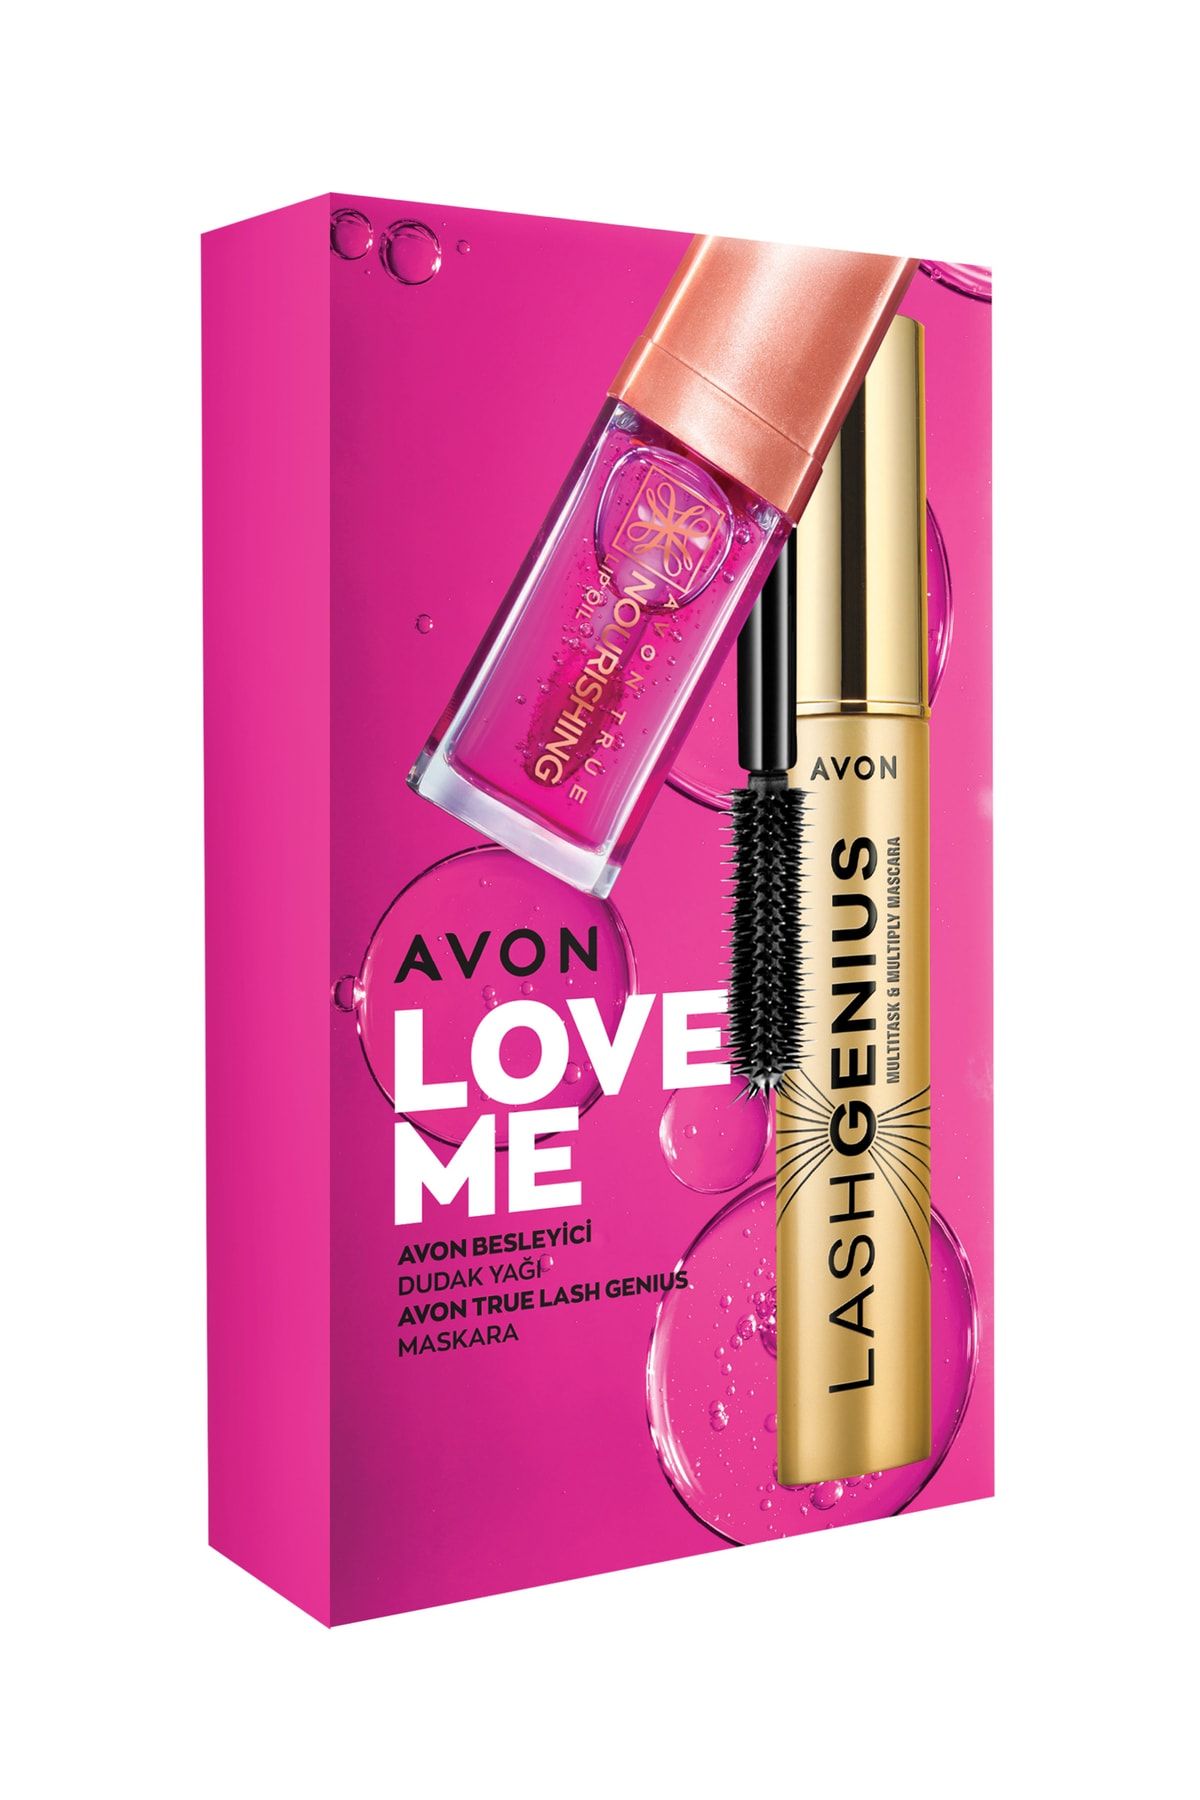 Avon Love Me Nourishing Dudak Yağı Blossom ve Genius Maskara Hediye Paketi